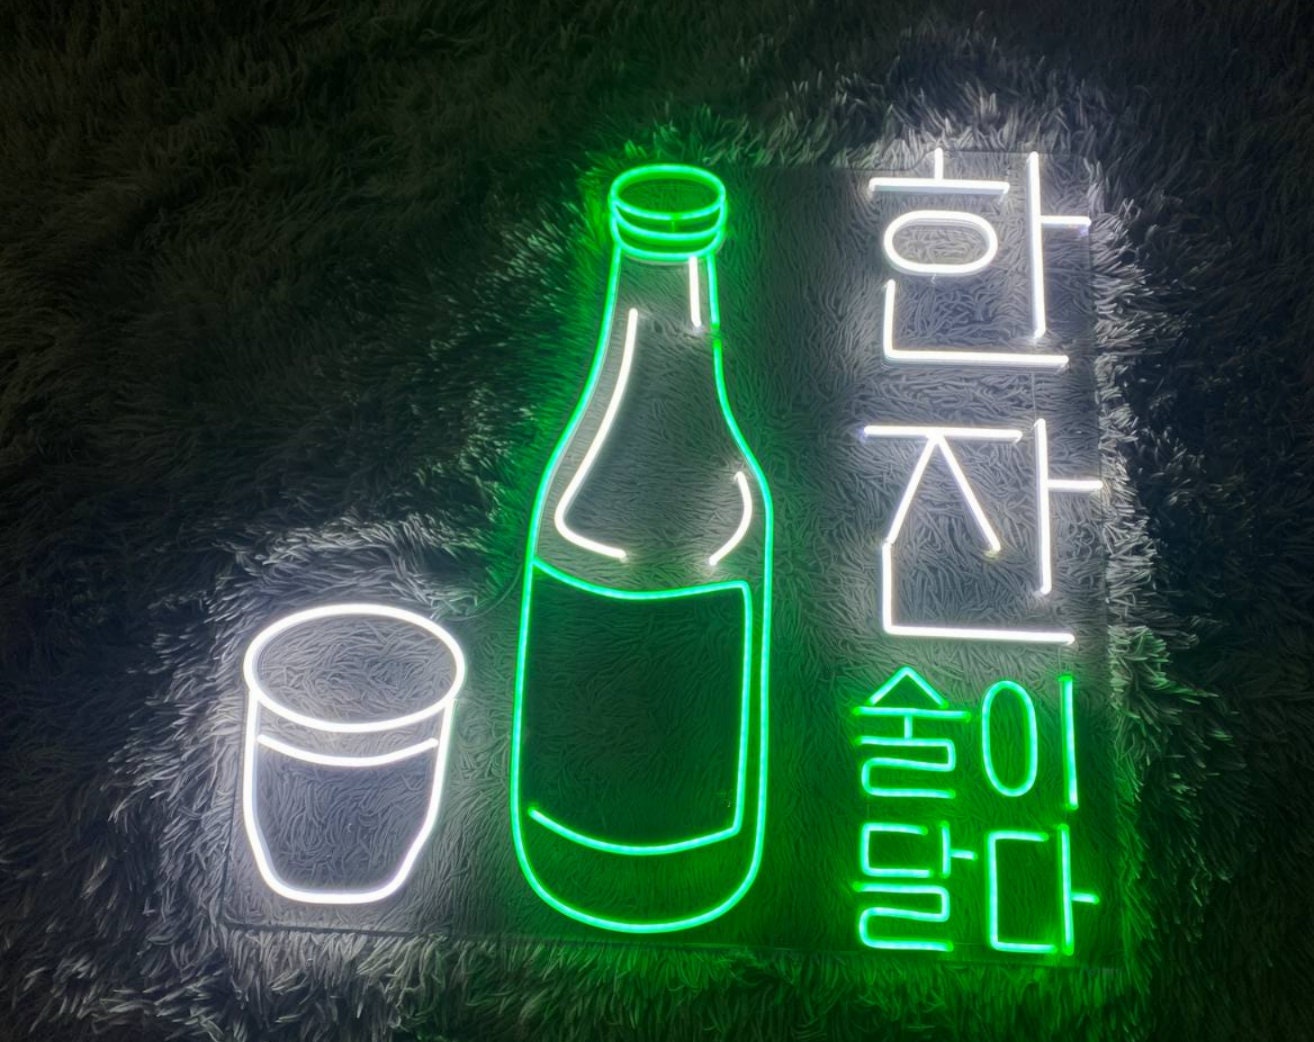 Soju Neon Sign Let's Drink Sake is Sweet Led Sign Wall Etsy